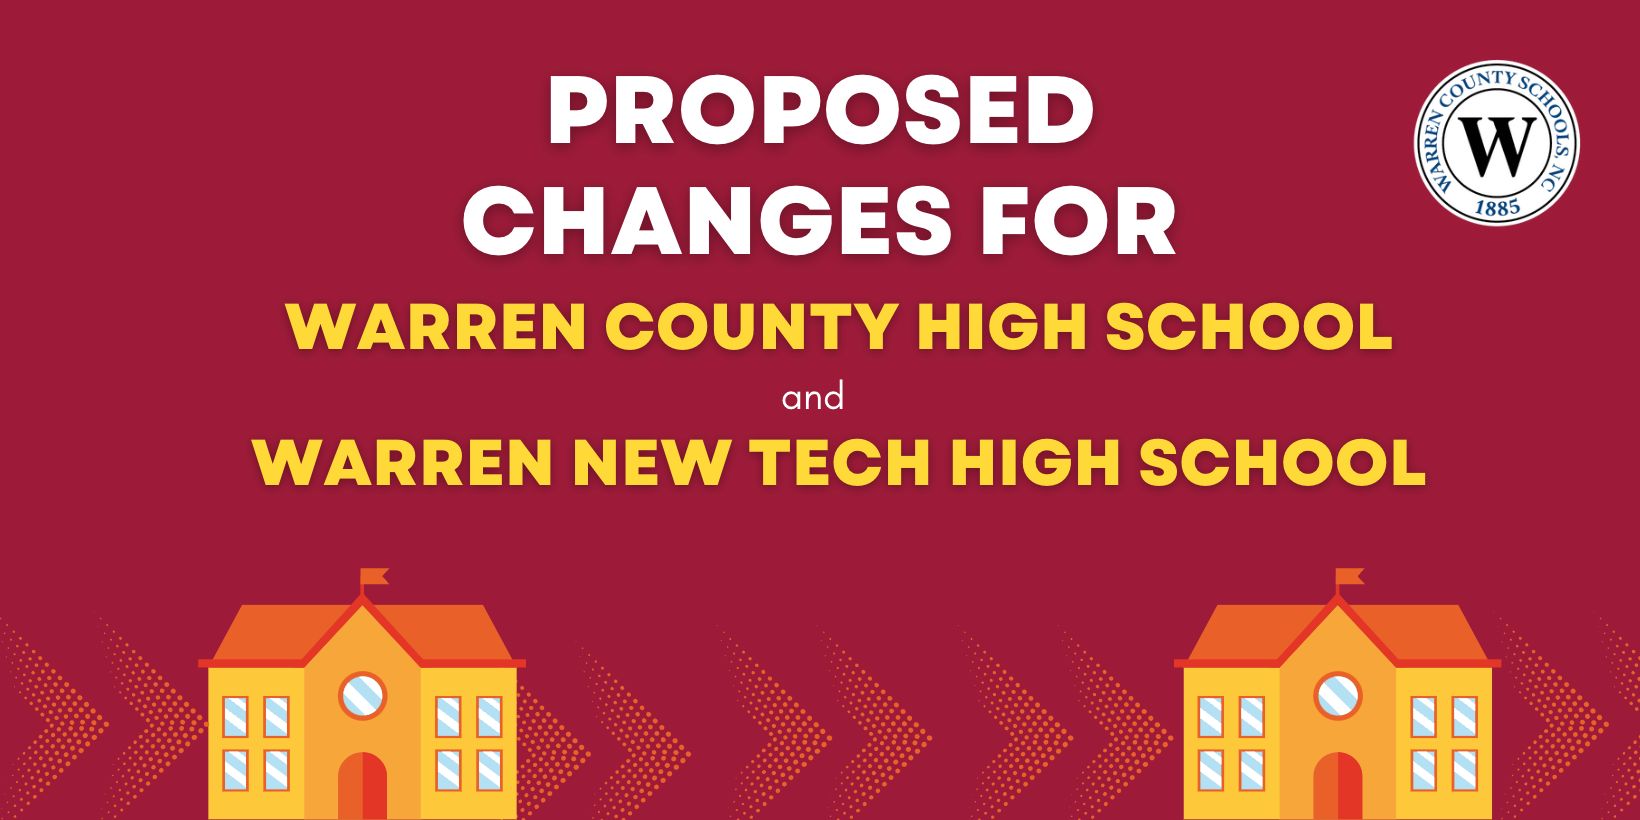 Proposed changes for Warren County High School and Warren New Tech High School